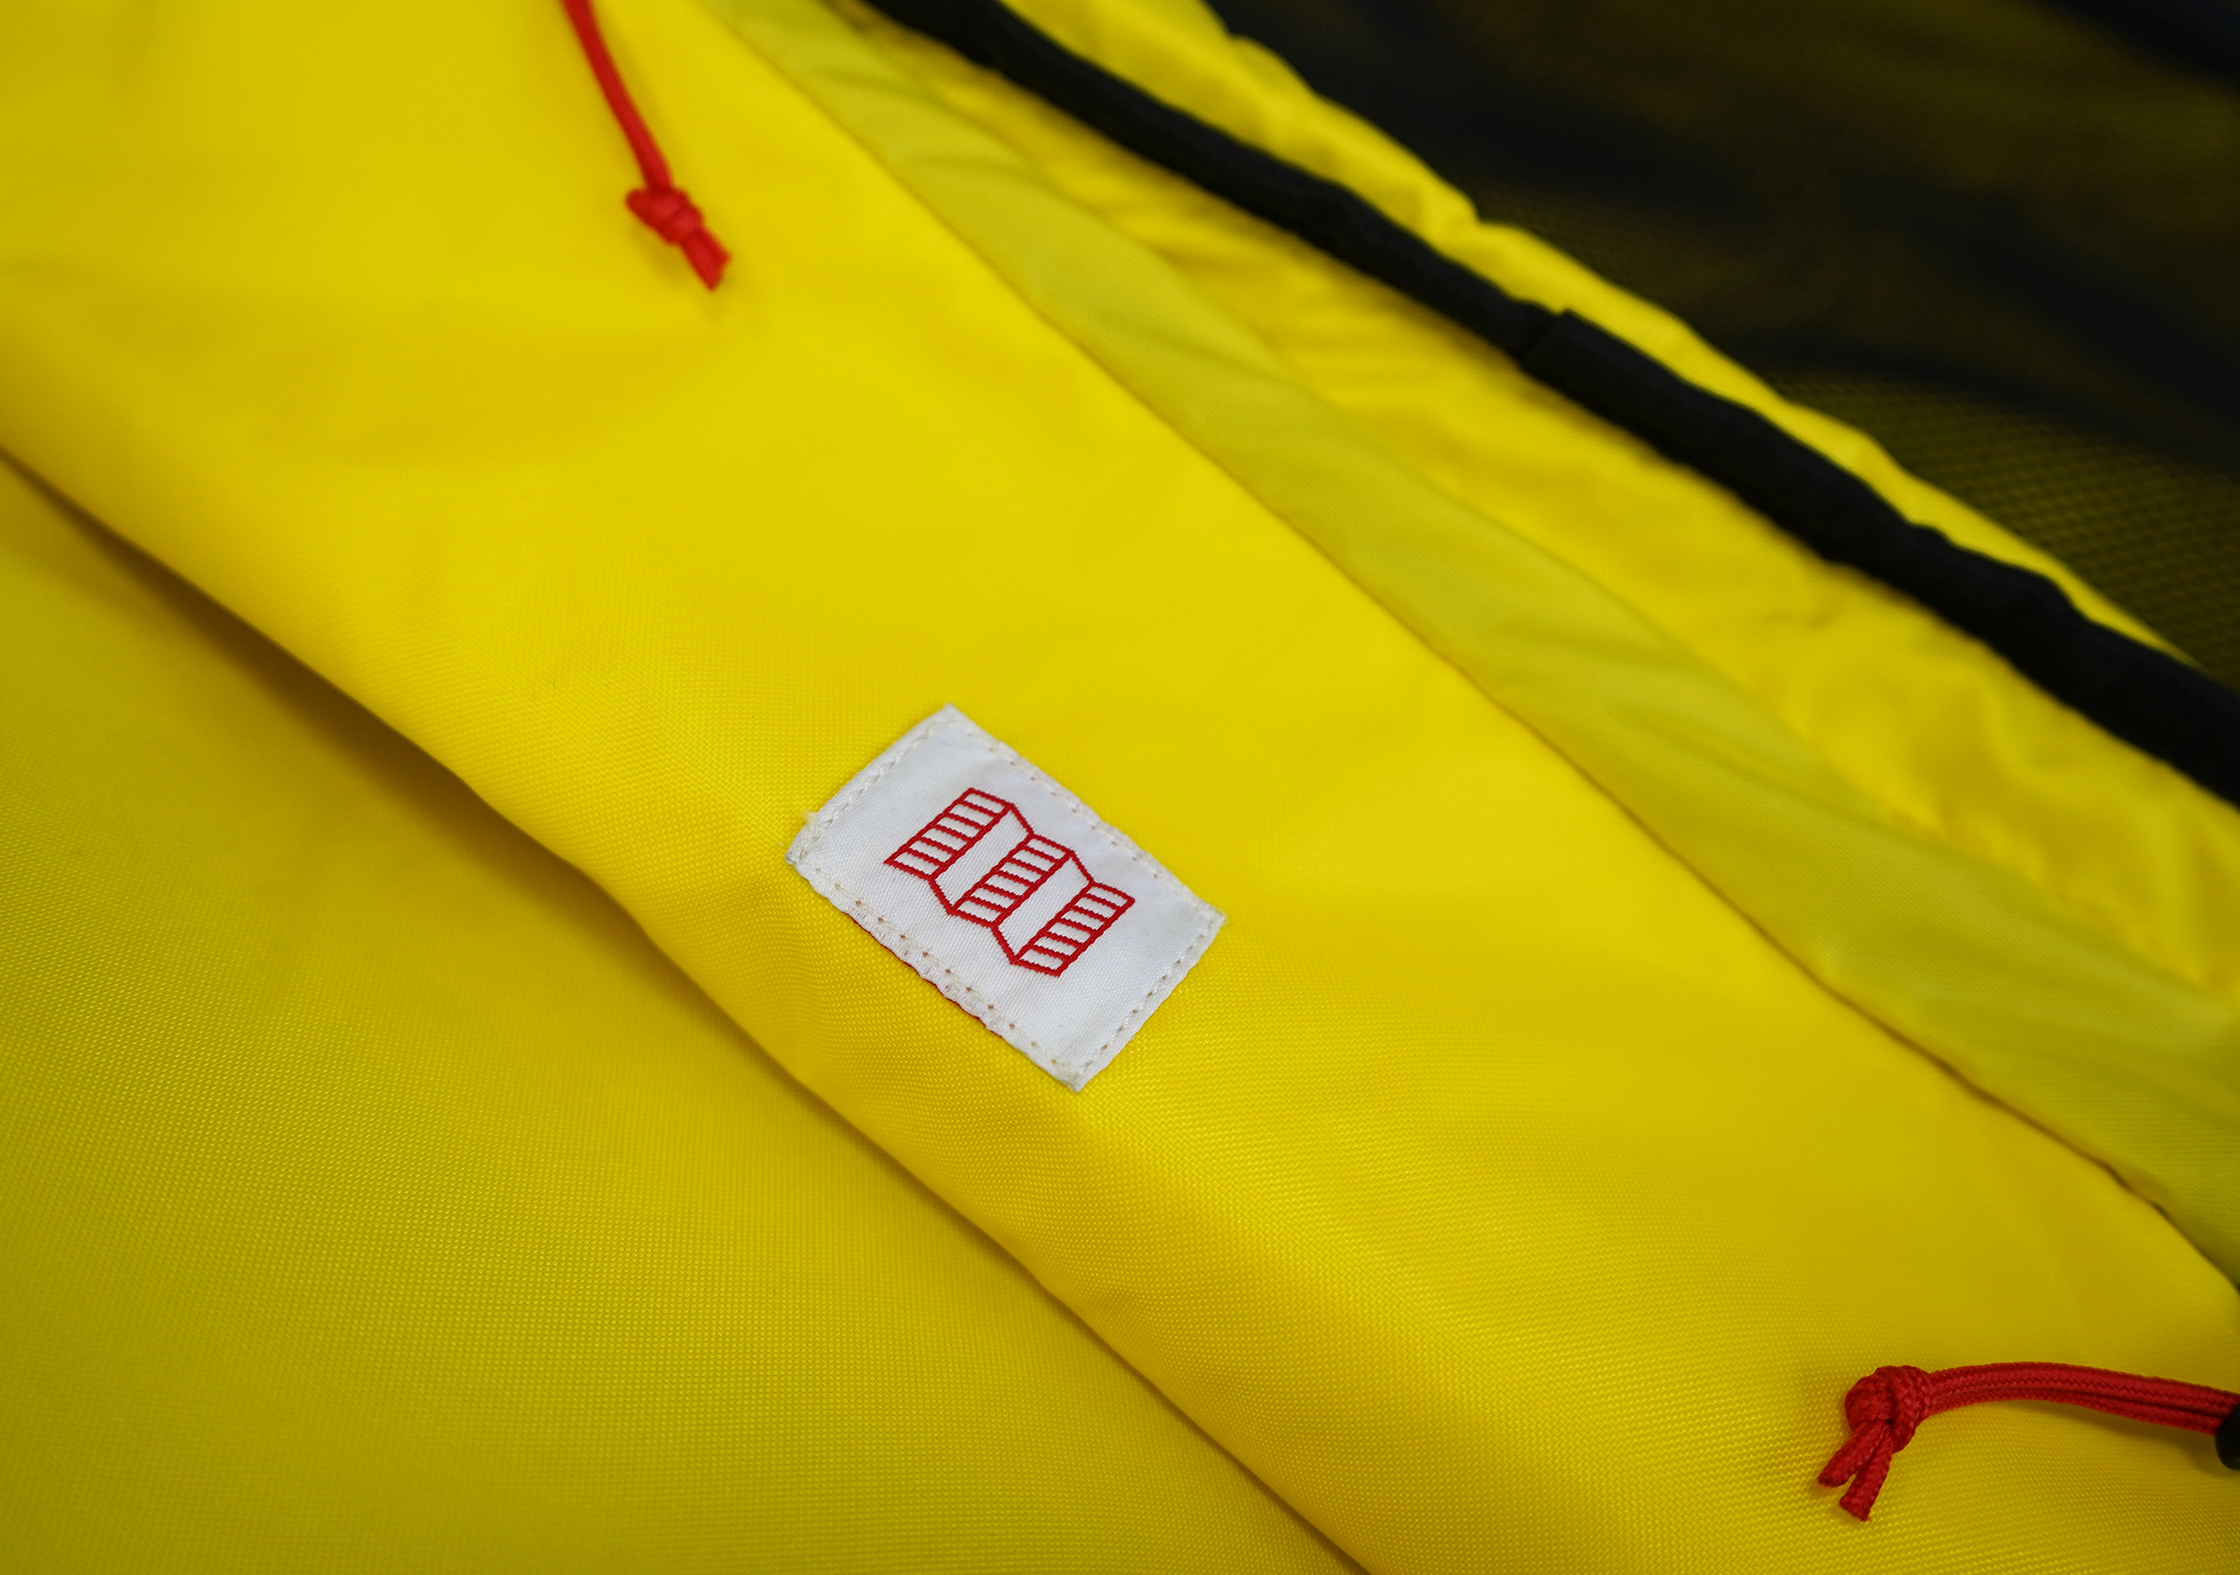 Topo Designs Travel Bag 40L Interior Branding & Fabric